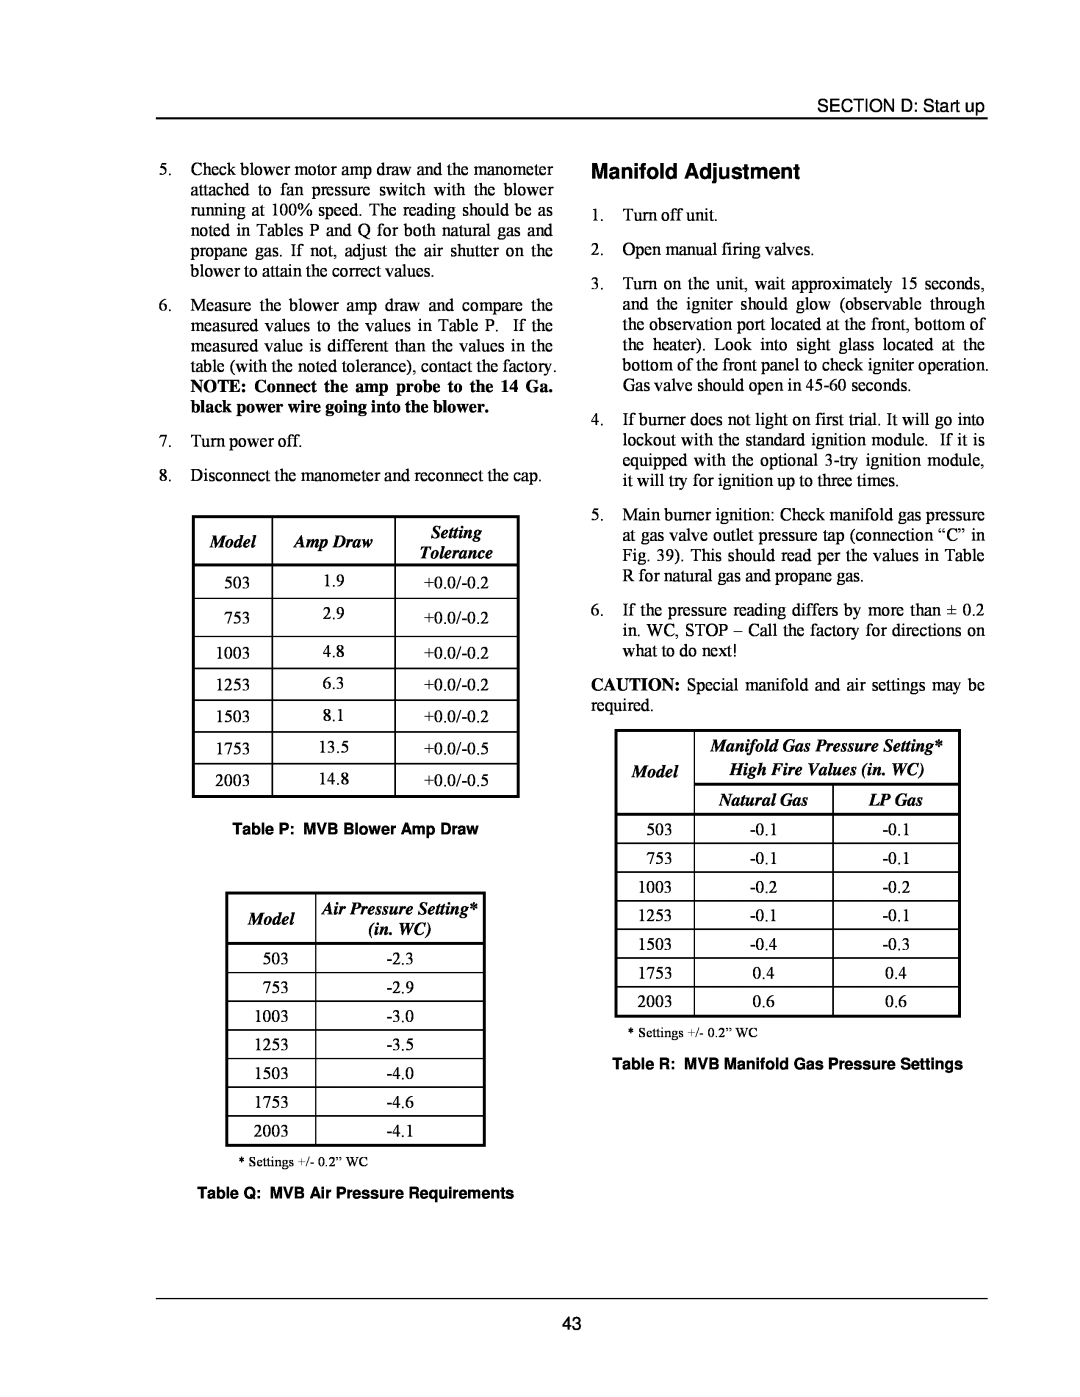 Raypak 503-2003 manual Manifold Adjustment 